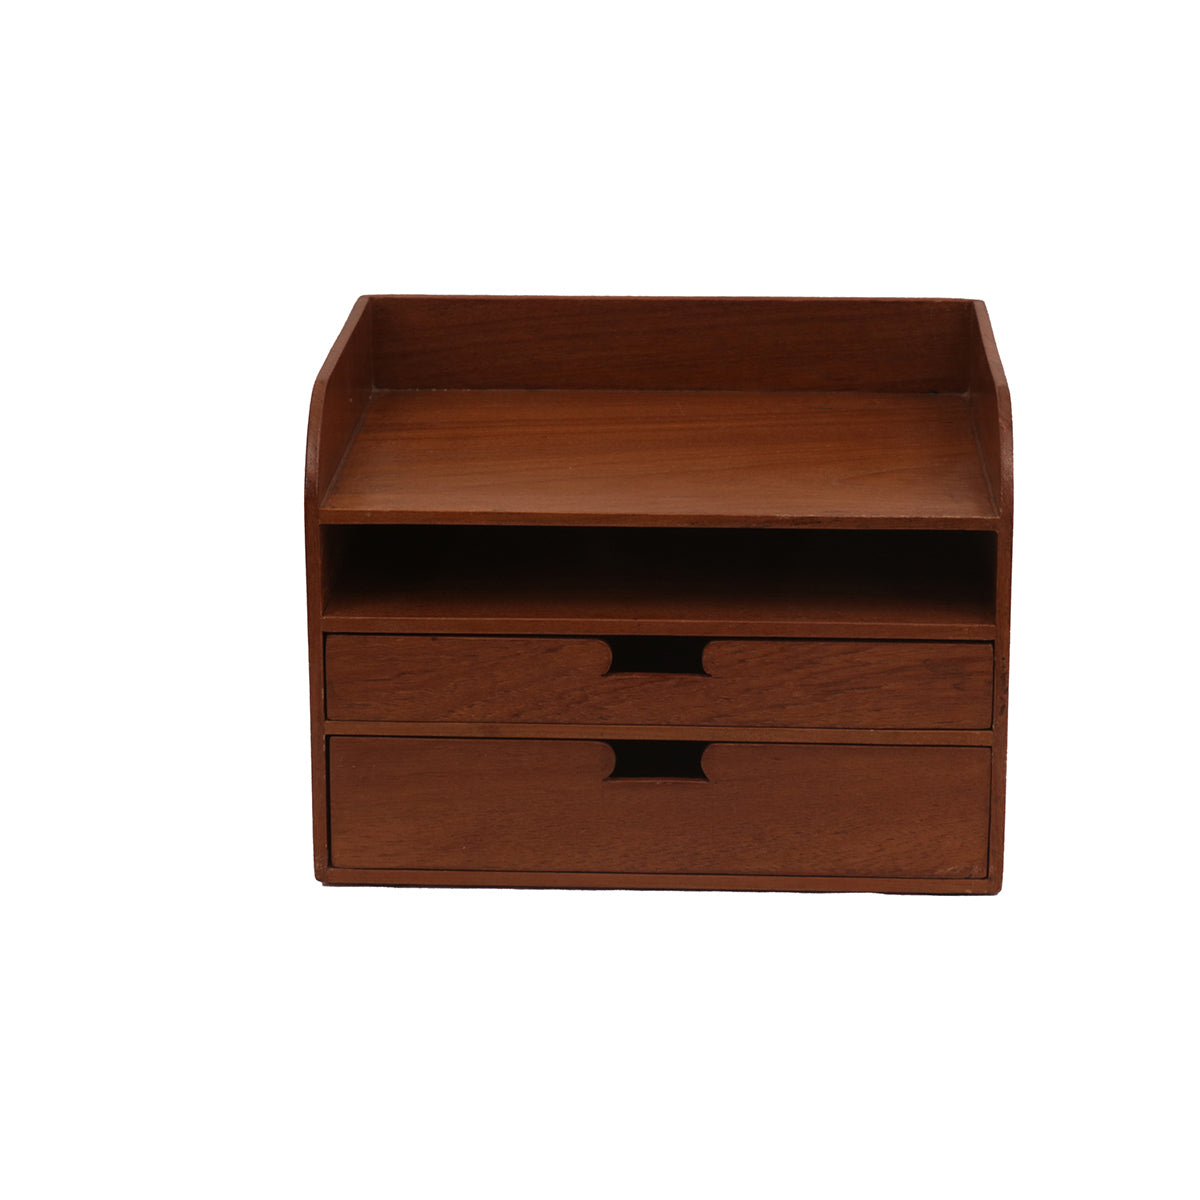 Wooden Office Desk Organizer (Natural Tone) Desk Organizer